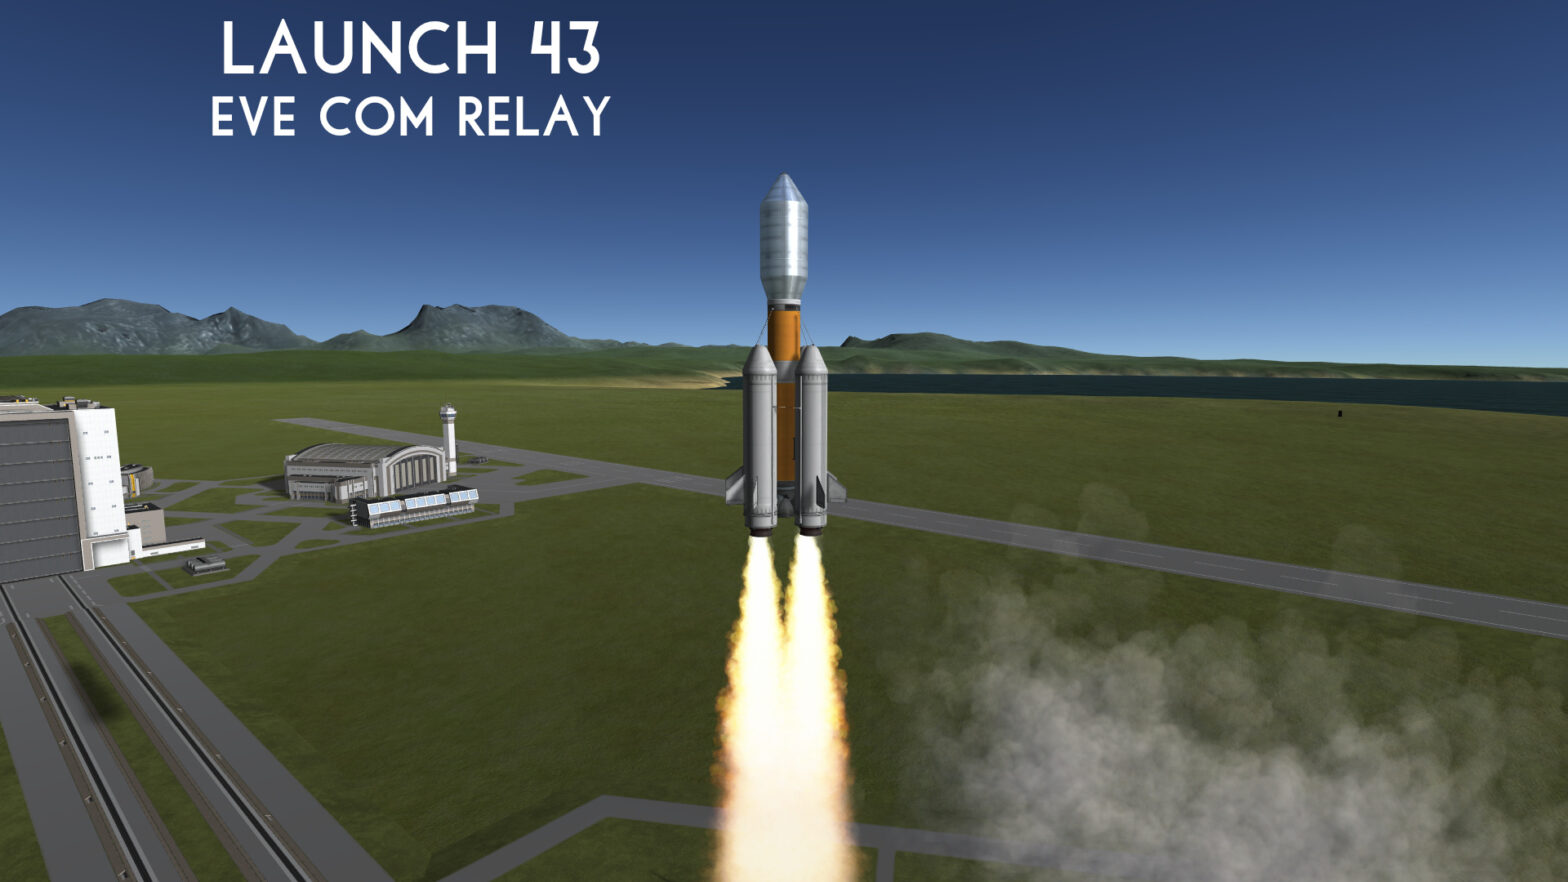 Launch 43 – Eve Com Relay